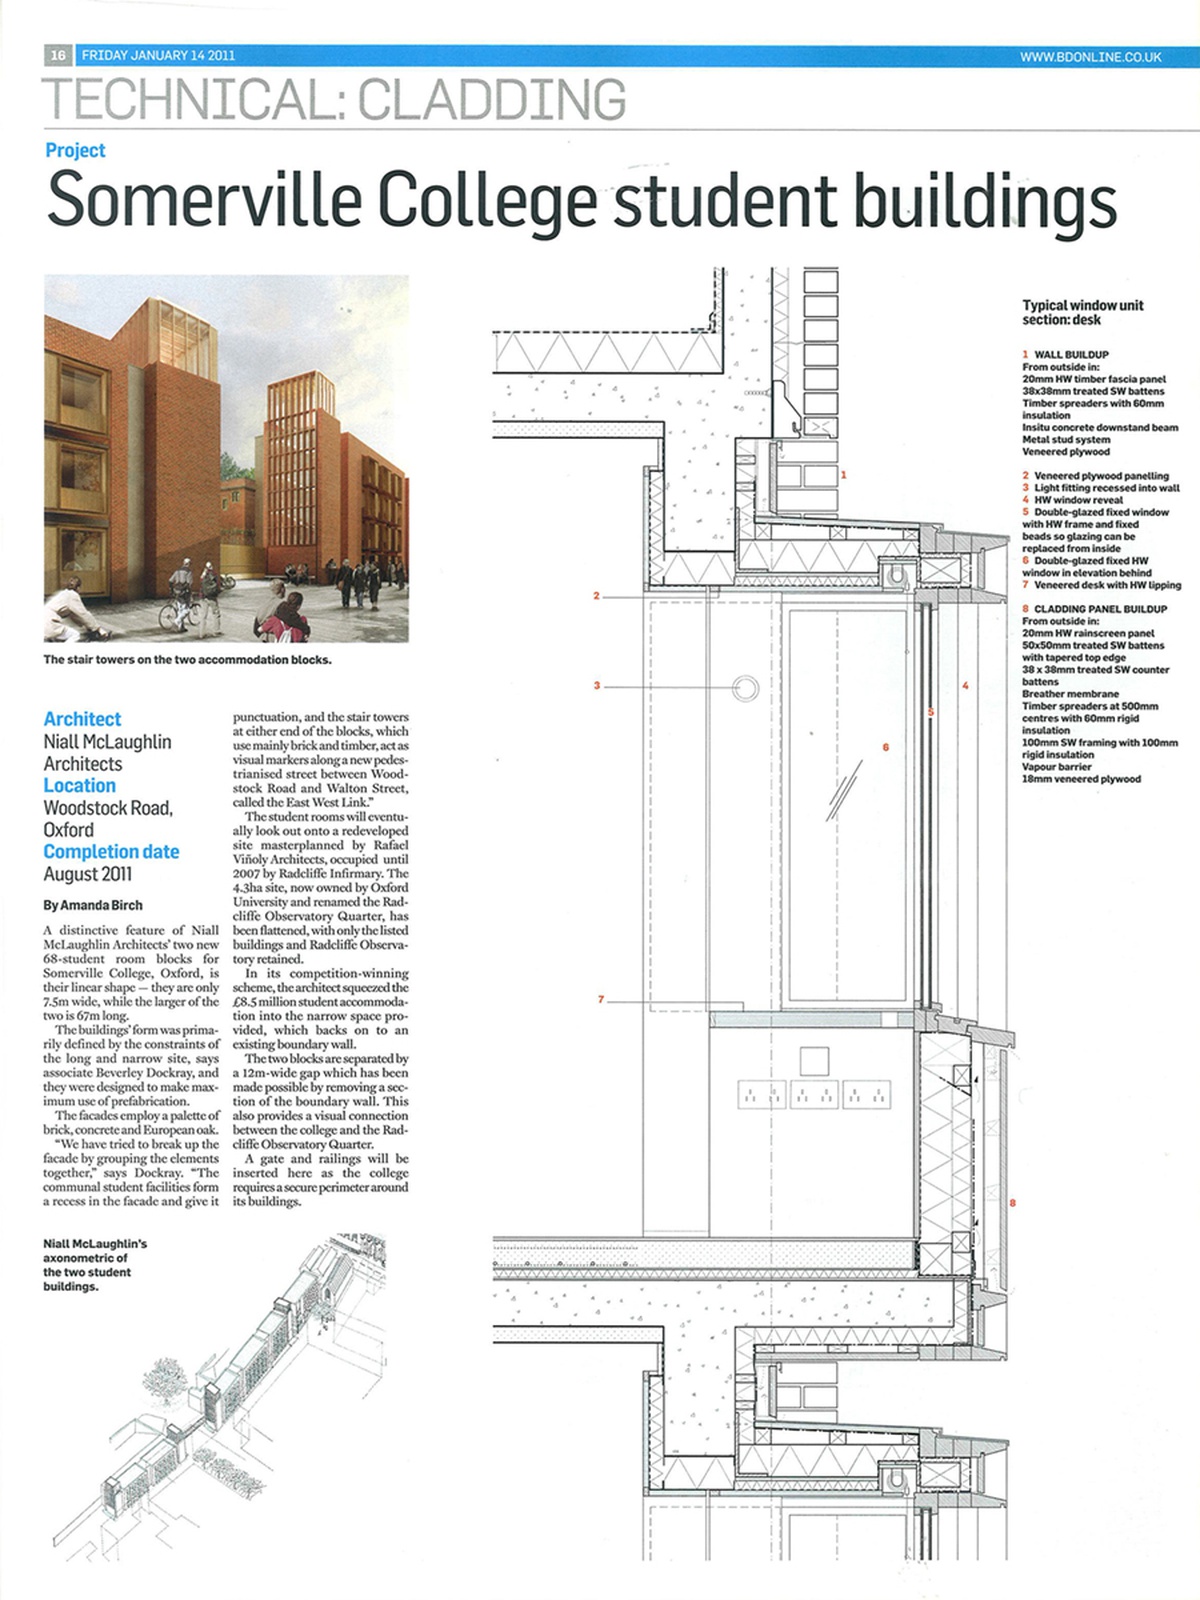 Cladding, Somerville College Student Buildings - Building Design